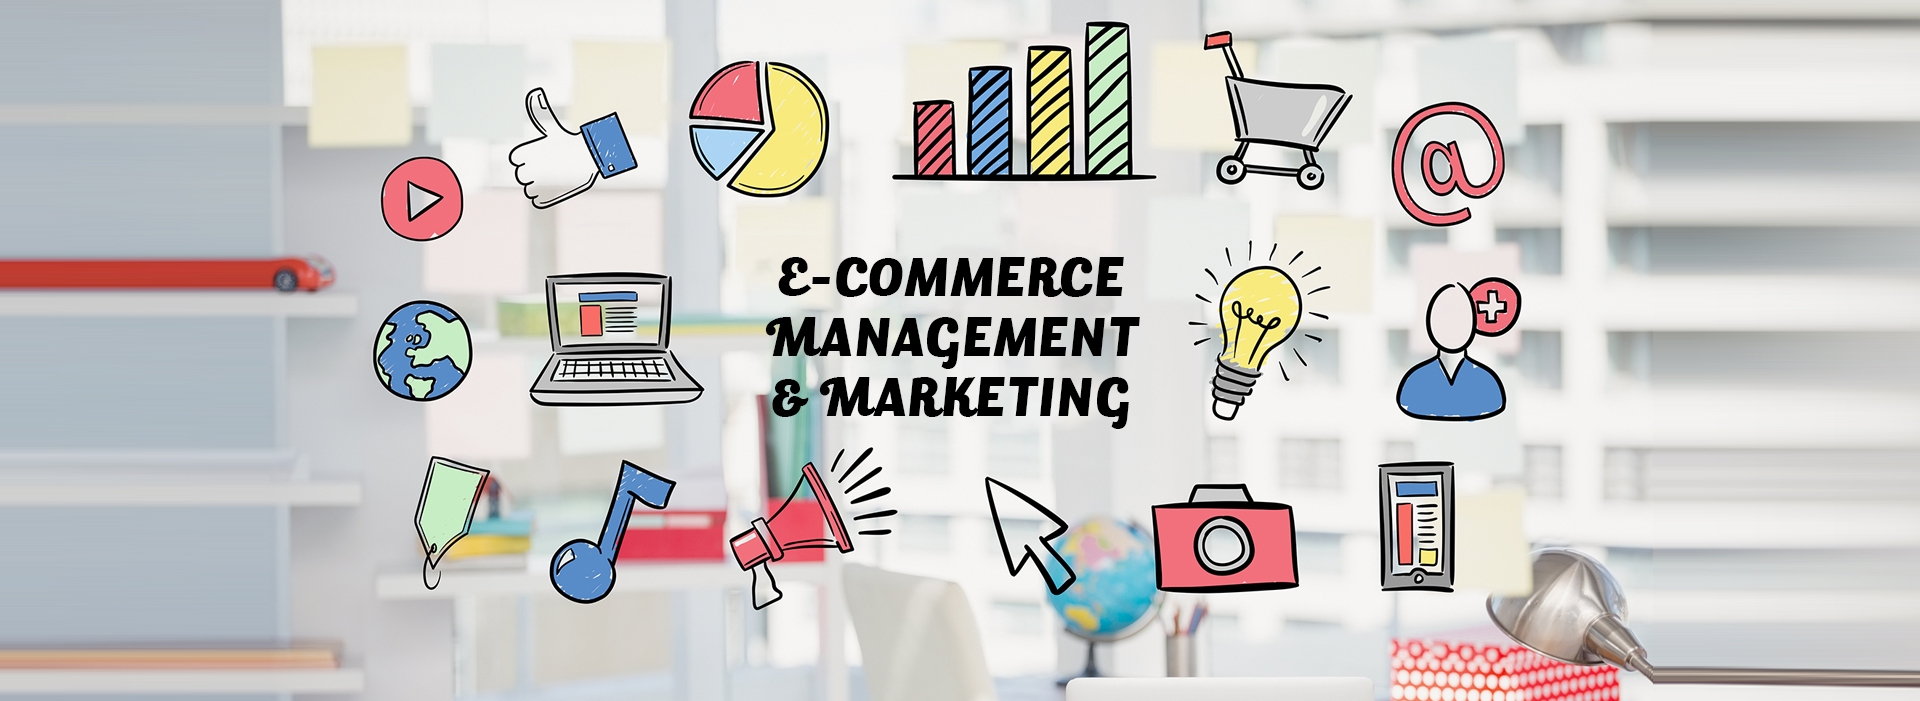 e-commerce management and Marketing